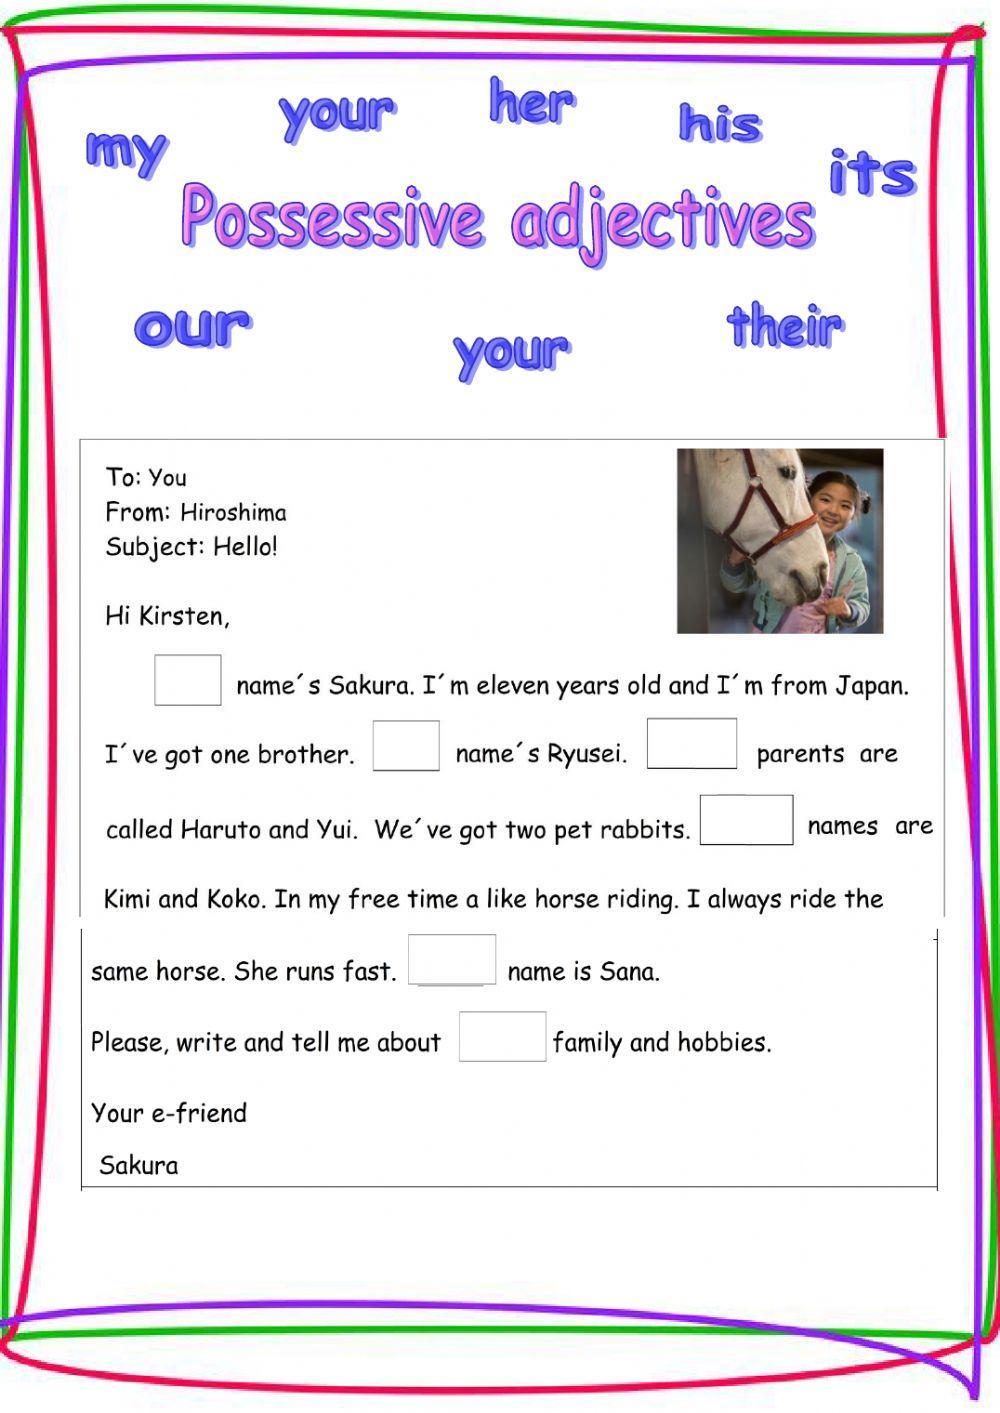 Possessive adjectives text